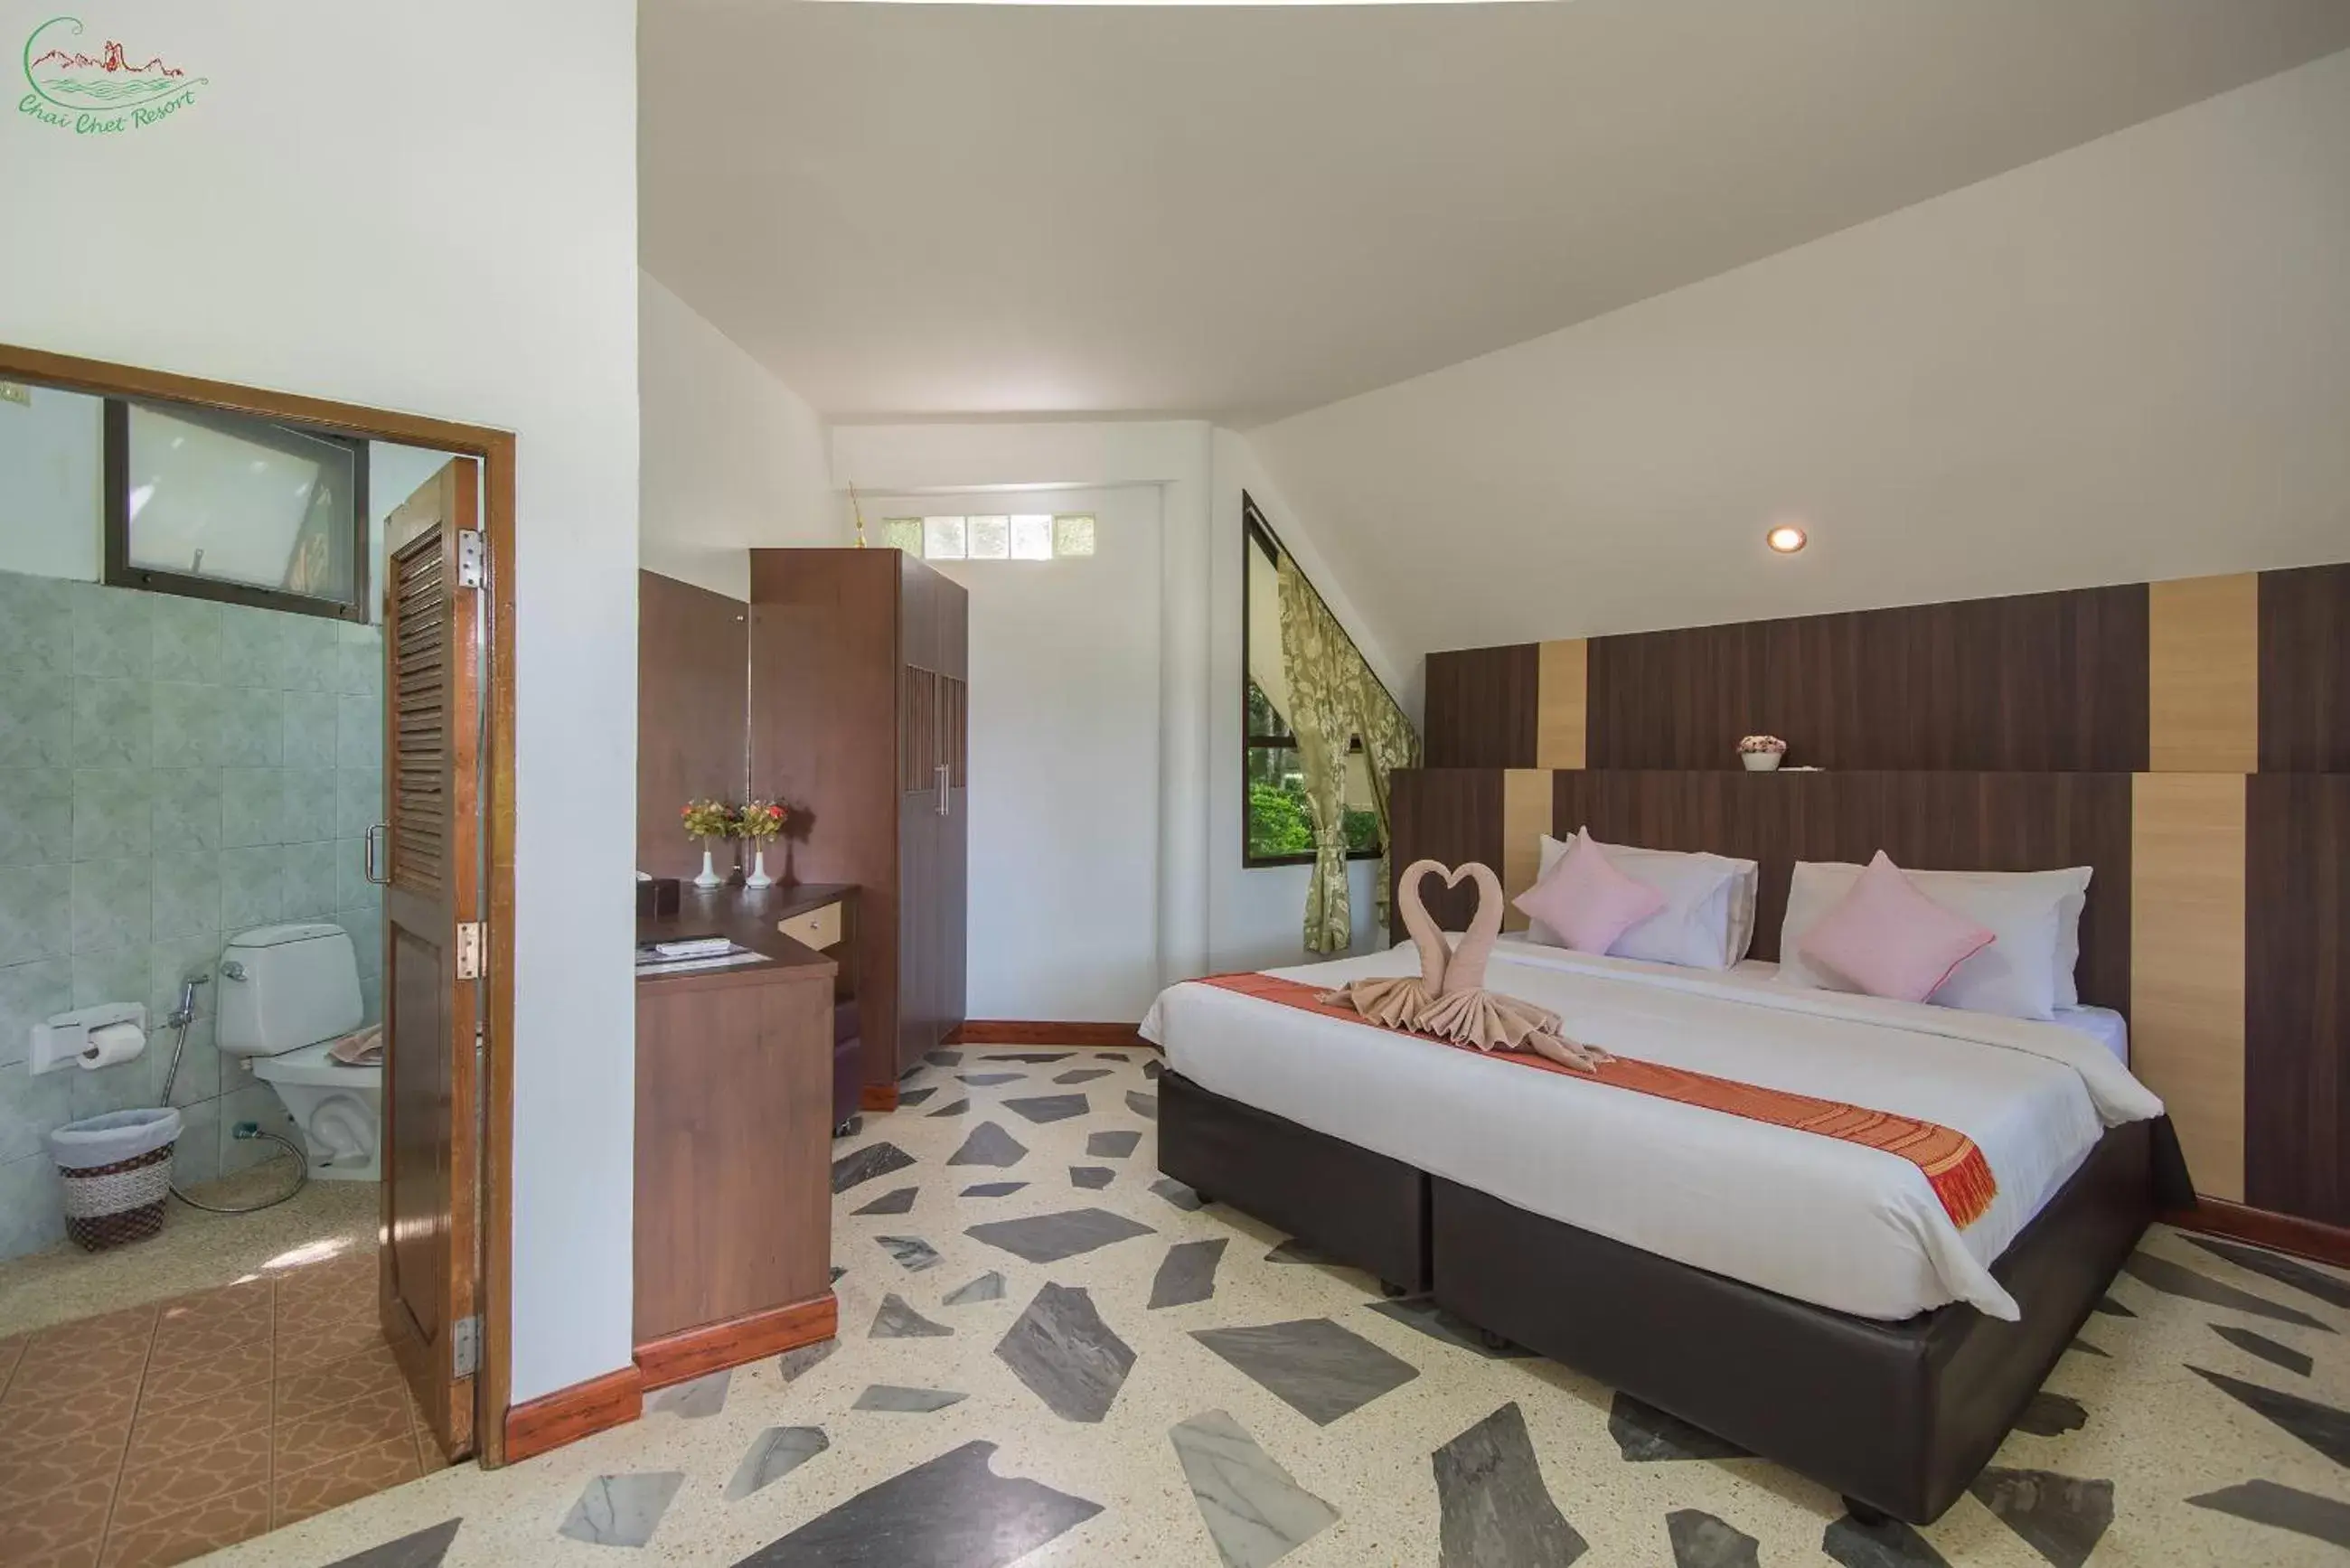 Bedroom in Chai Chet Resort Koh Chang